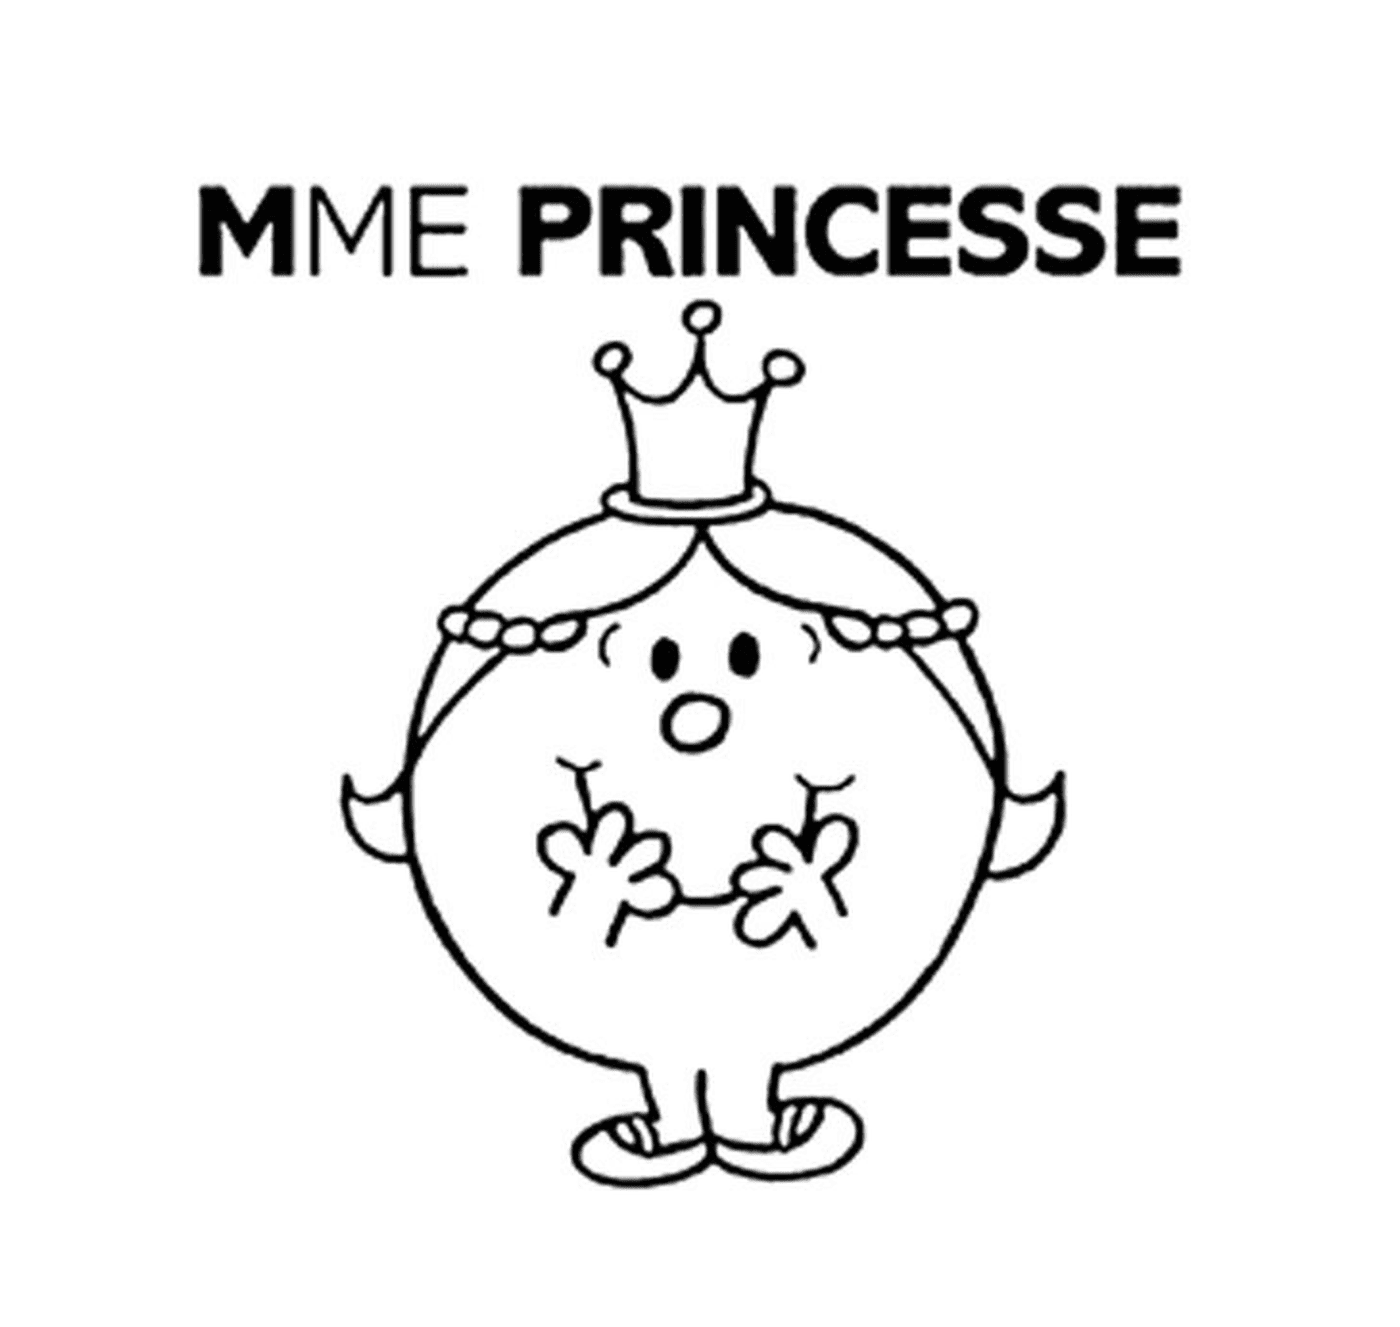 mme princesse monsieur madame